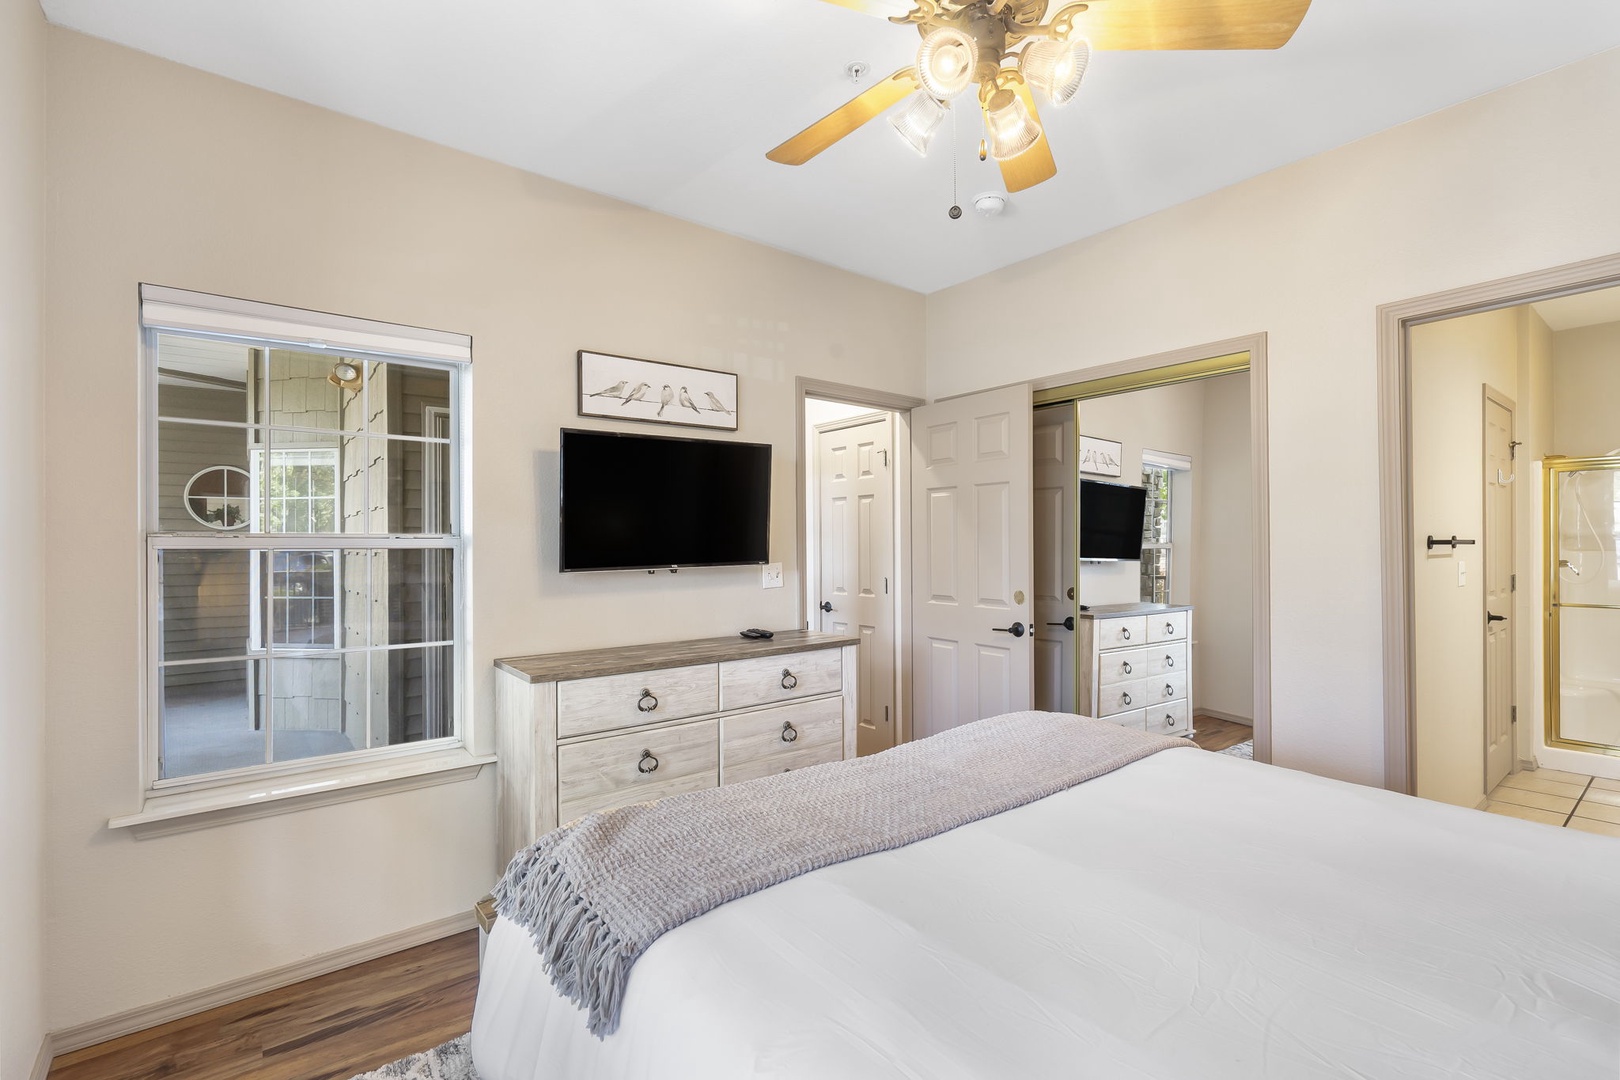 The queen bedroom offers a private en suite, ceiling fan, & TV